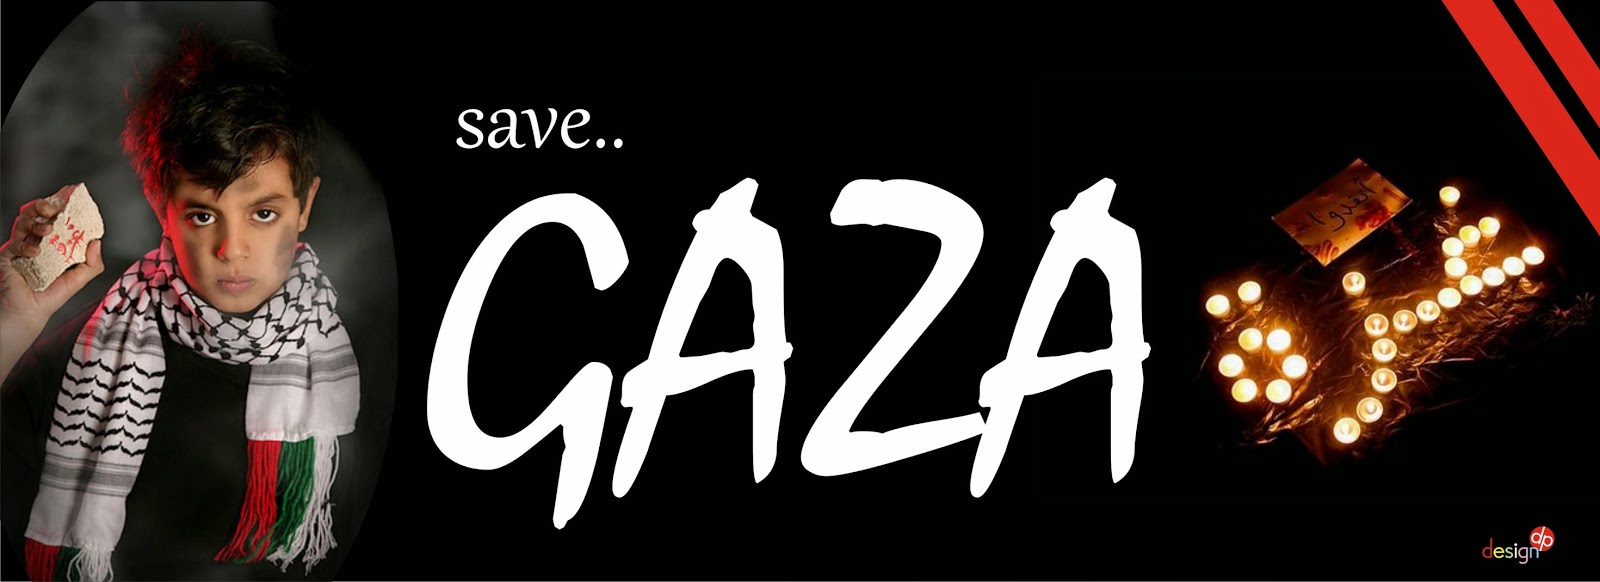 Kumpulan Gambar PP DP Gaza Dan Palestina